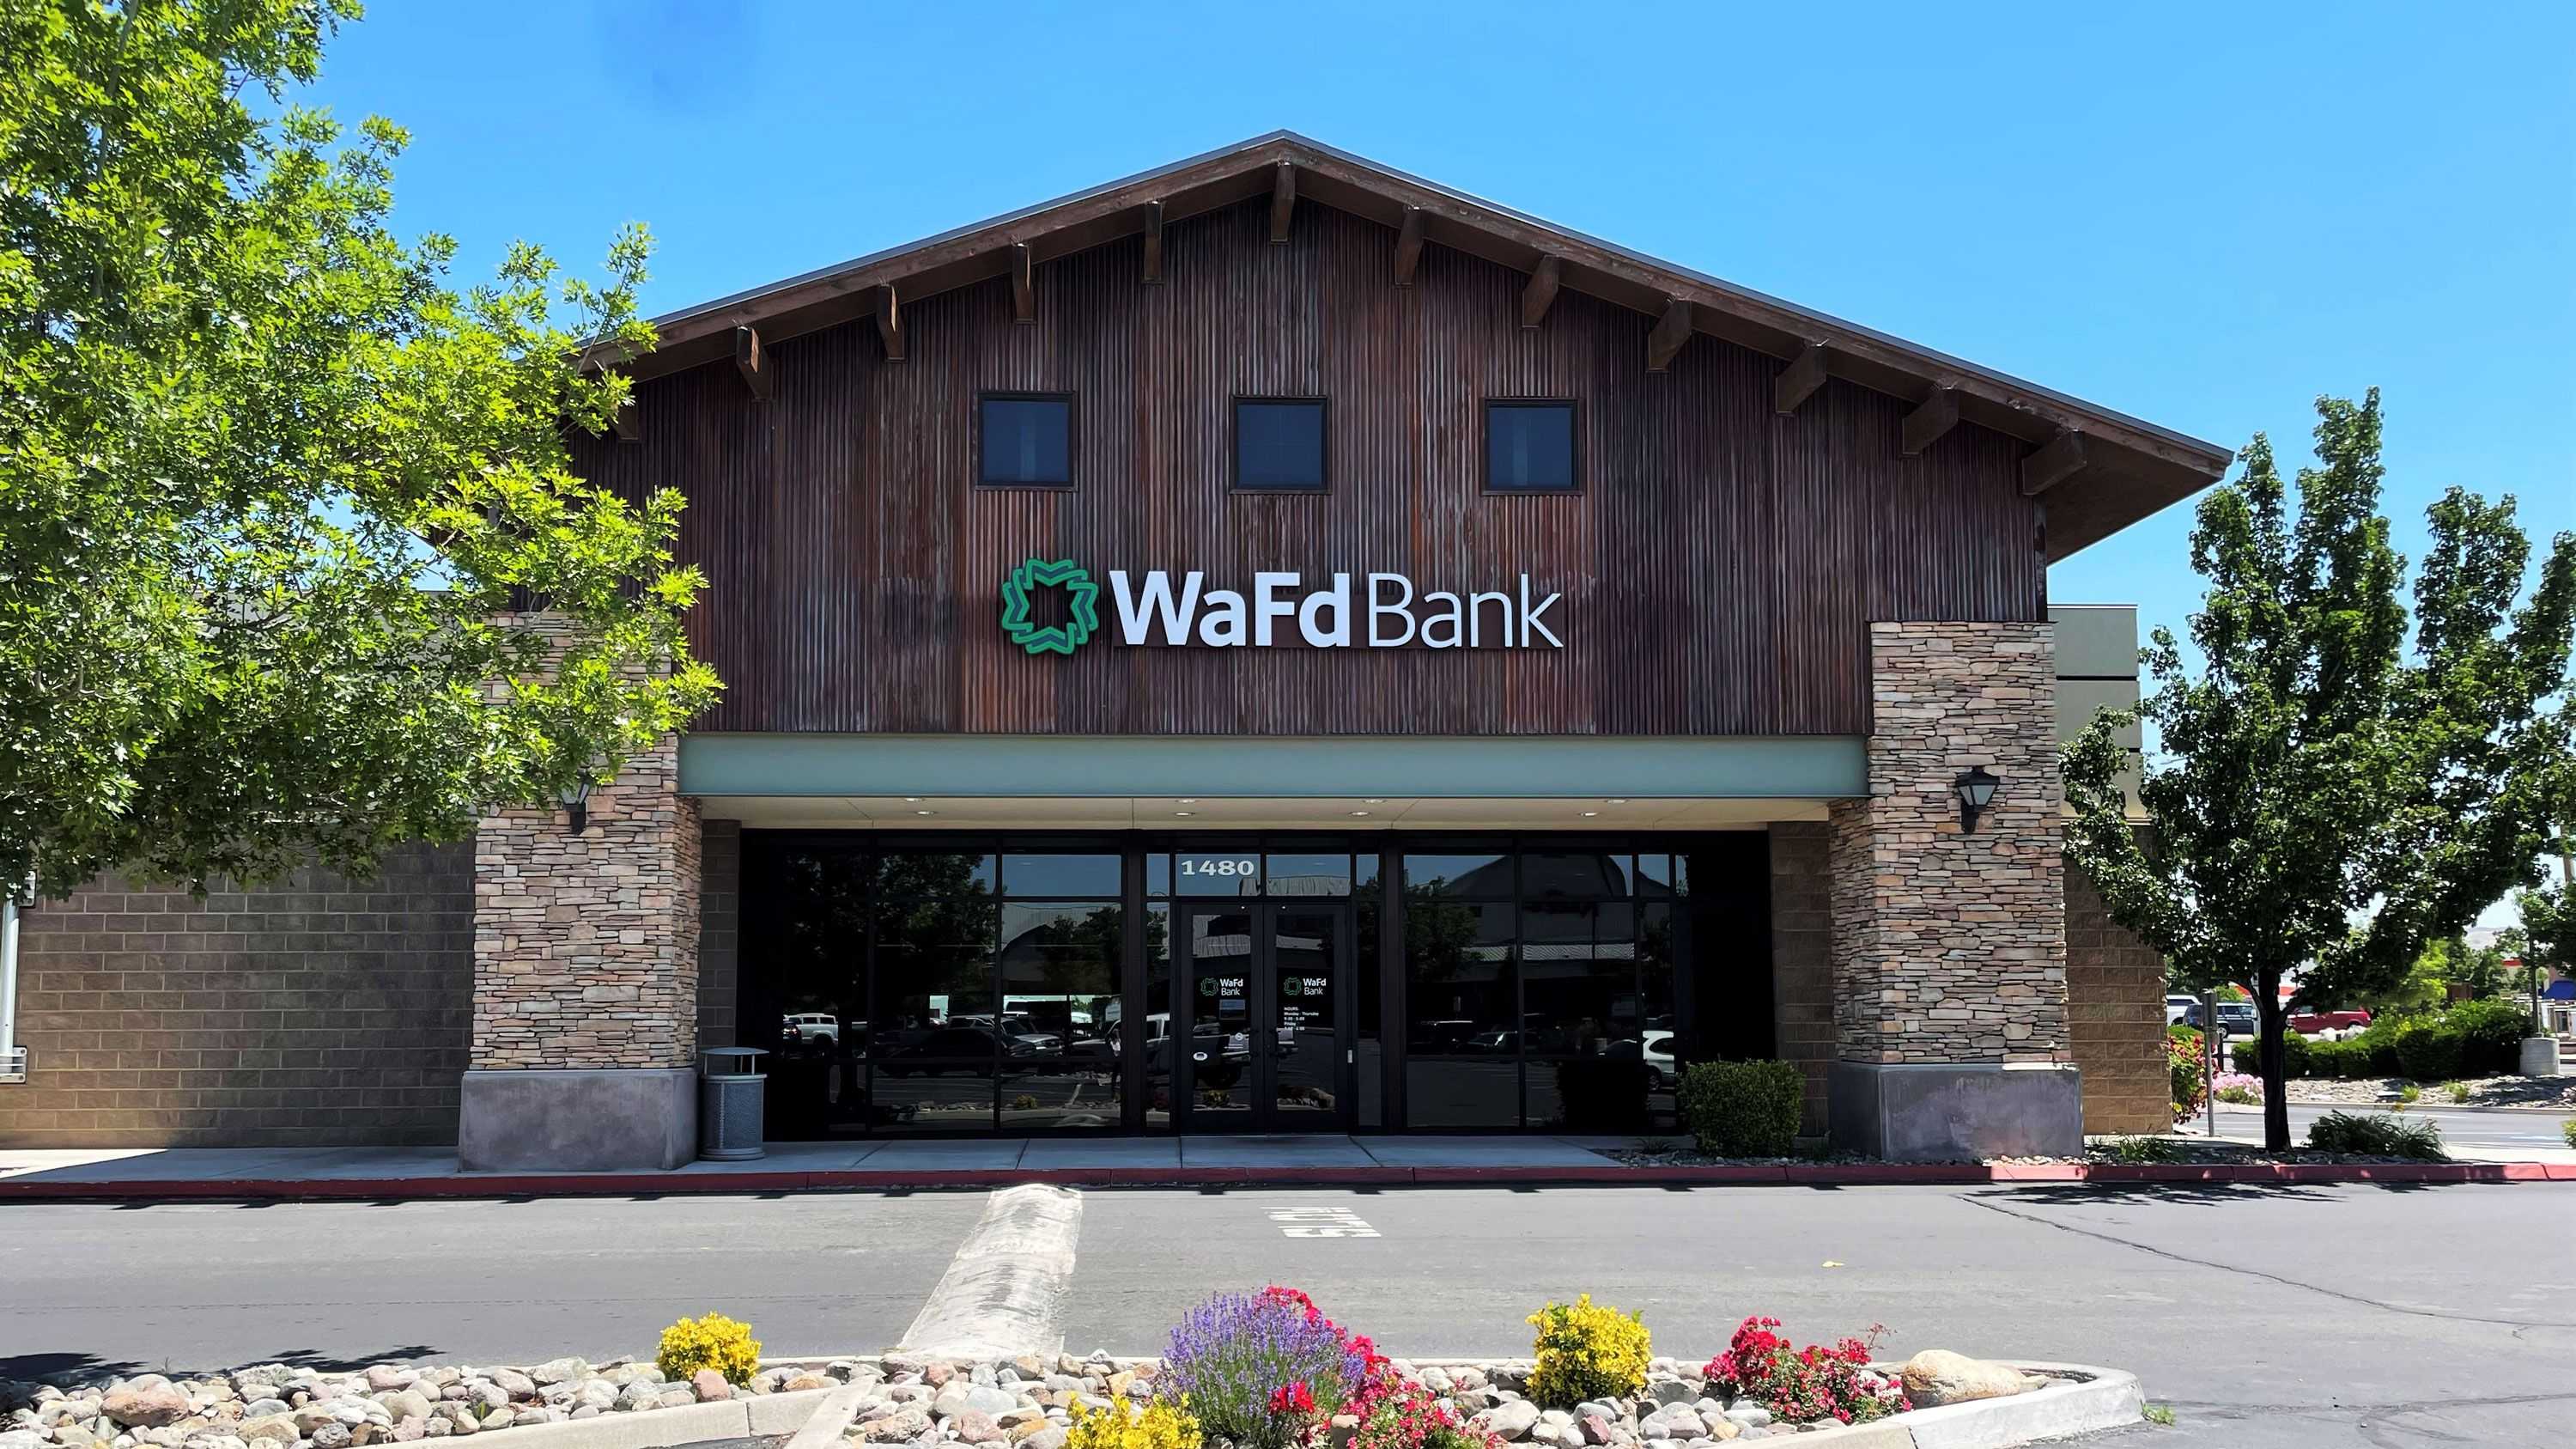 WaFd Bank in Fernley, Nevada #1231 - Washington Federal.